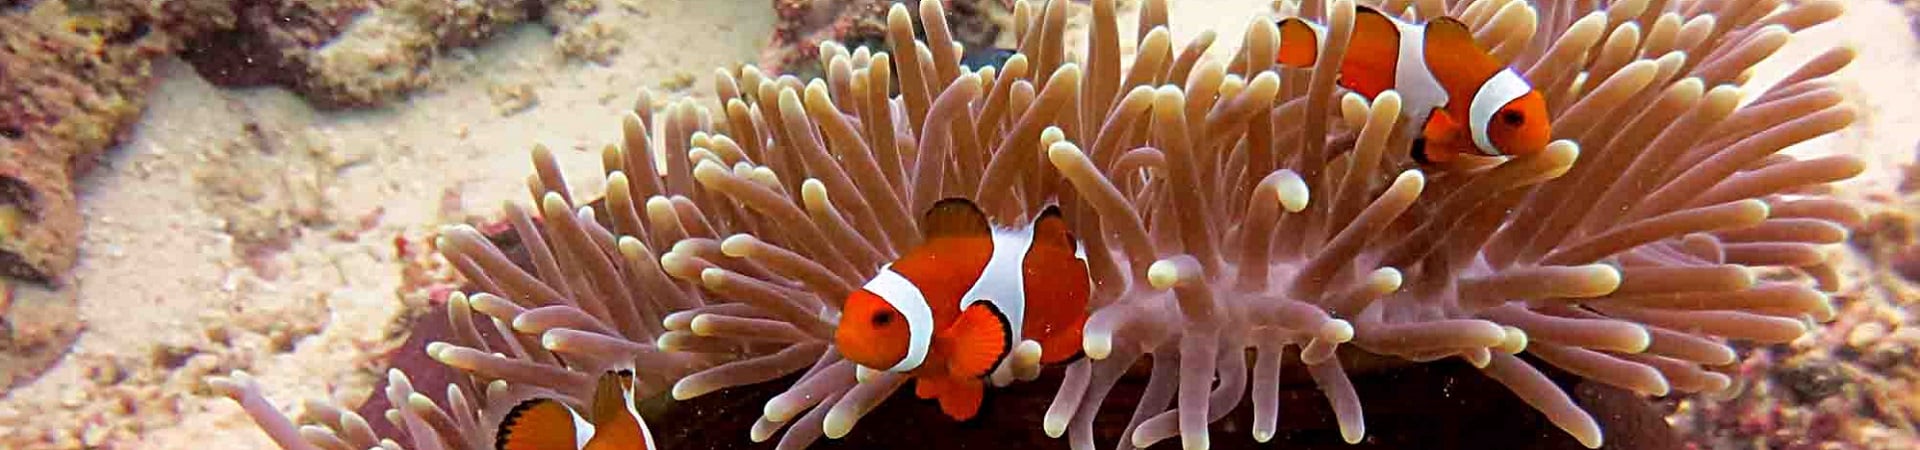 Image of Amed Dive 2x Dives Bali